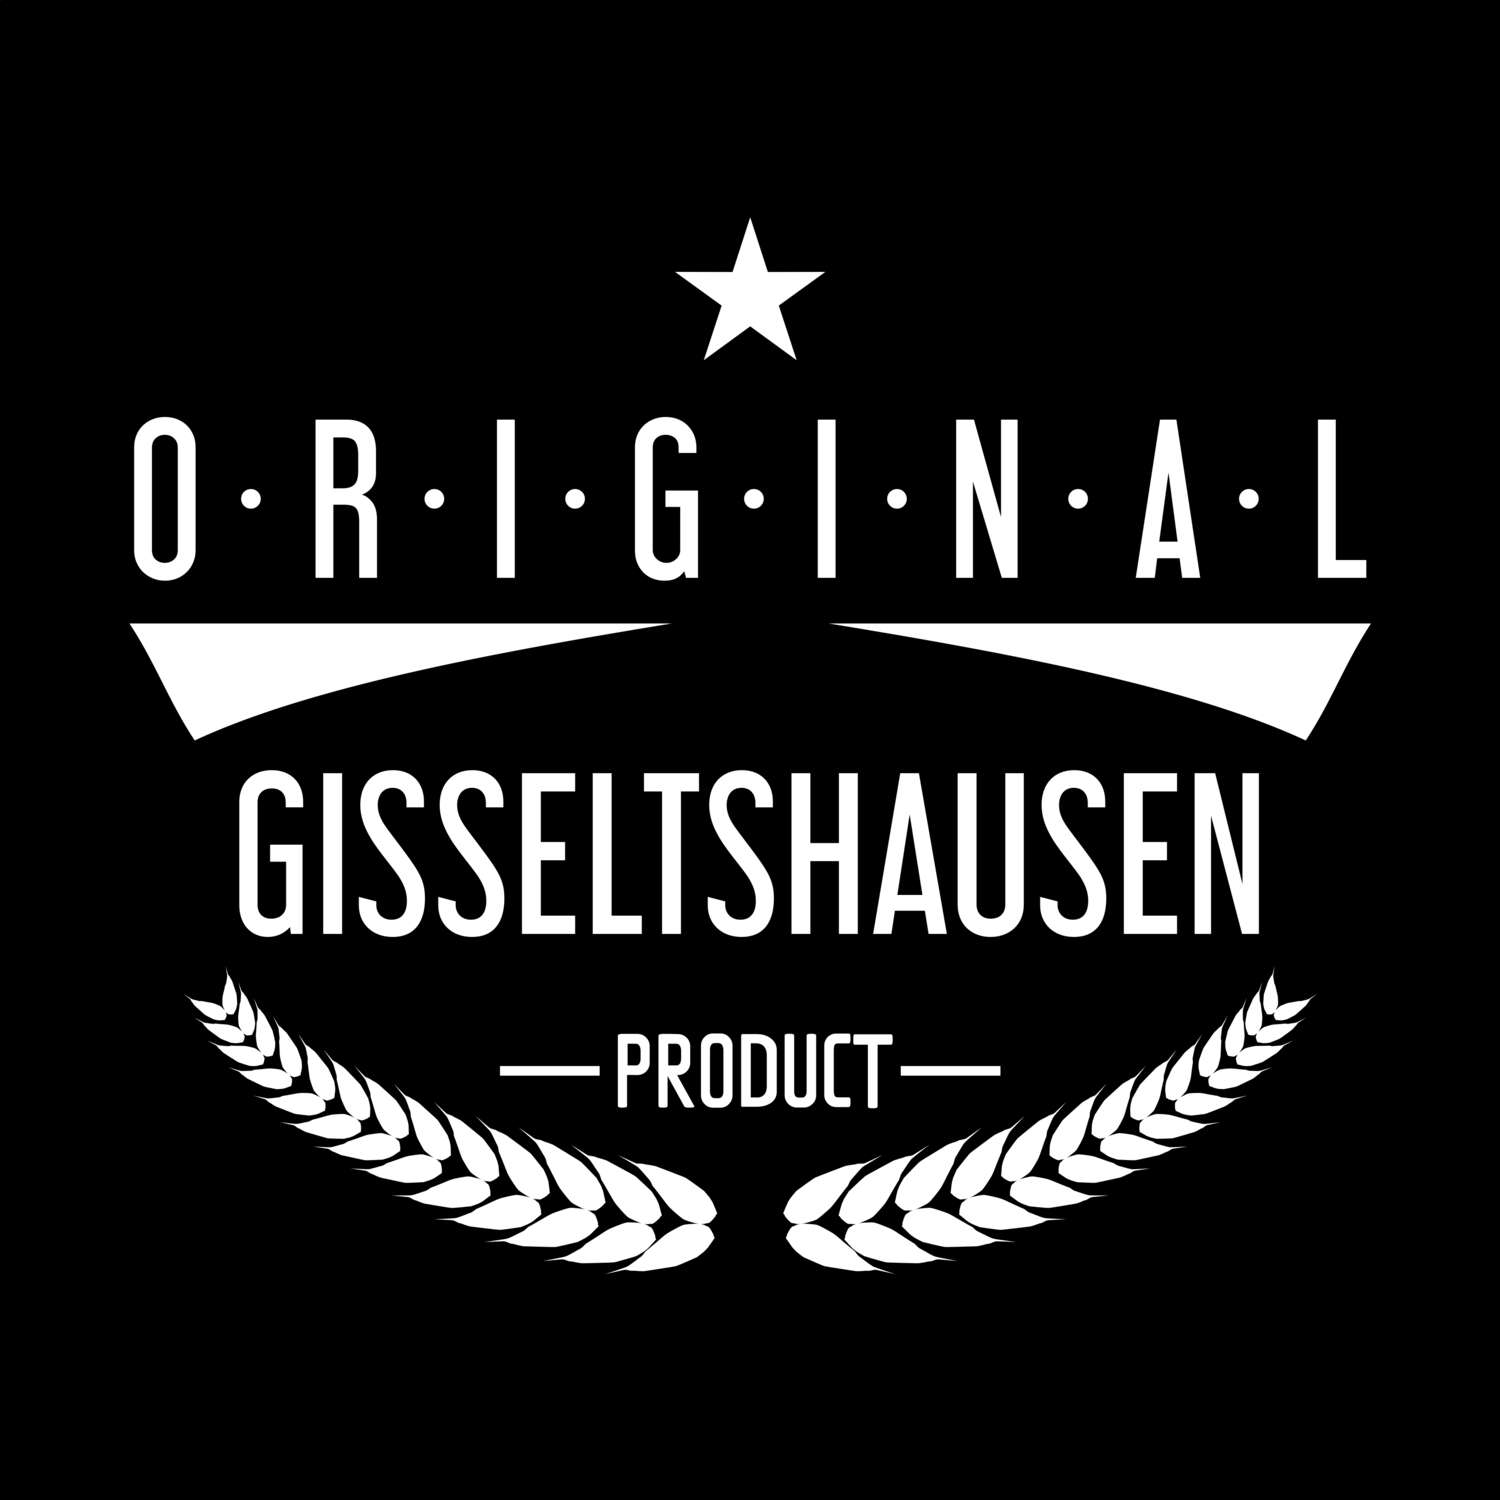 Gisseltshausen T-Shirt »Original Product«